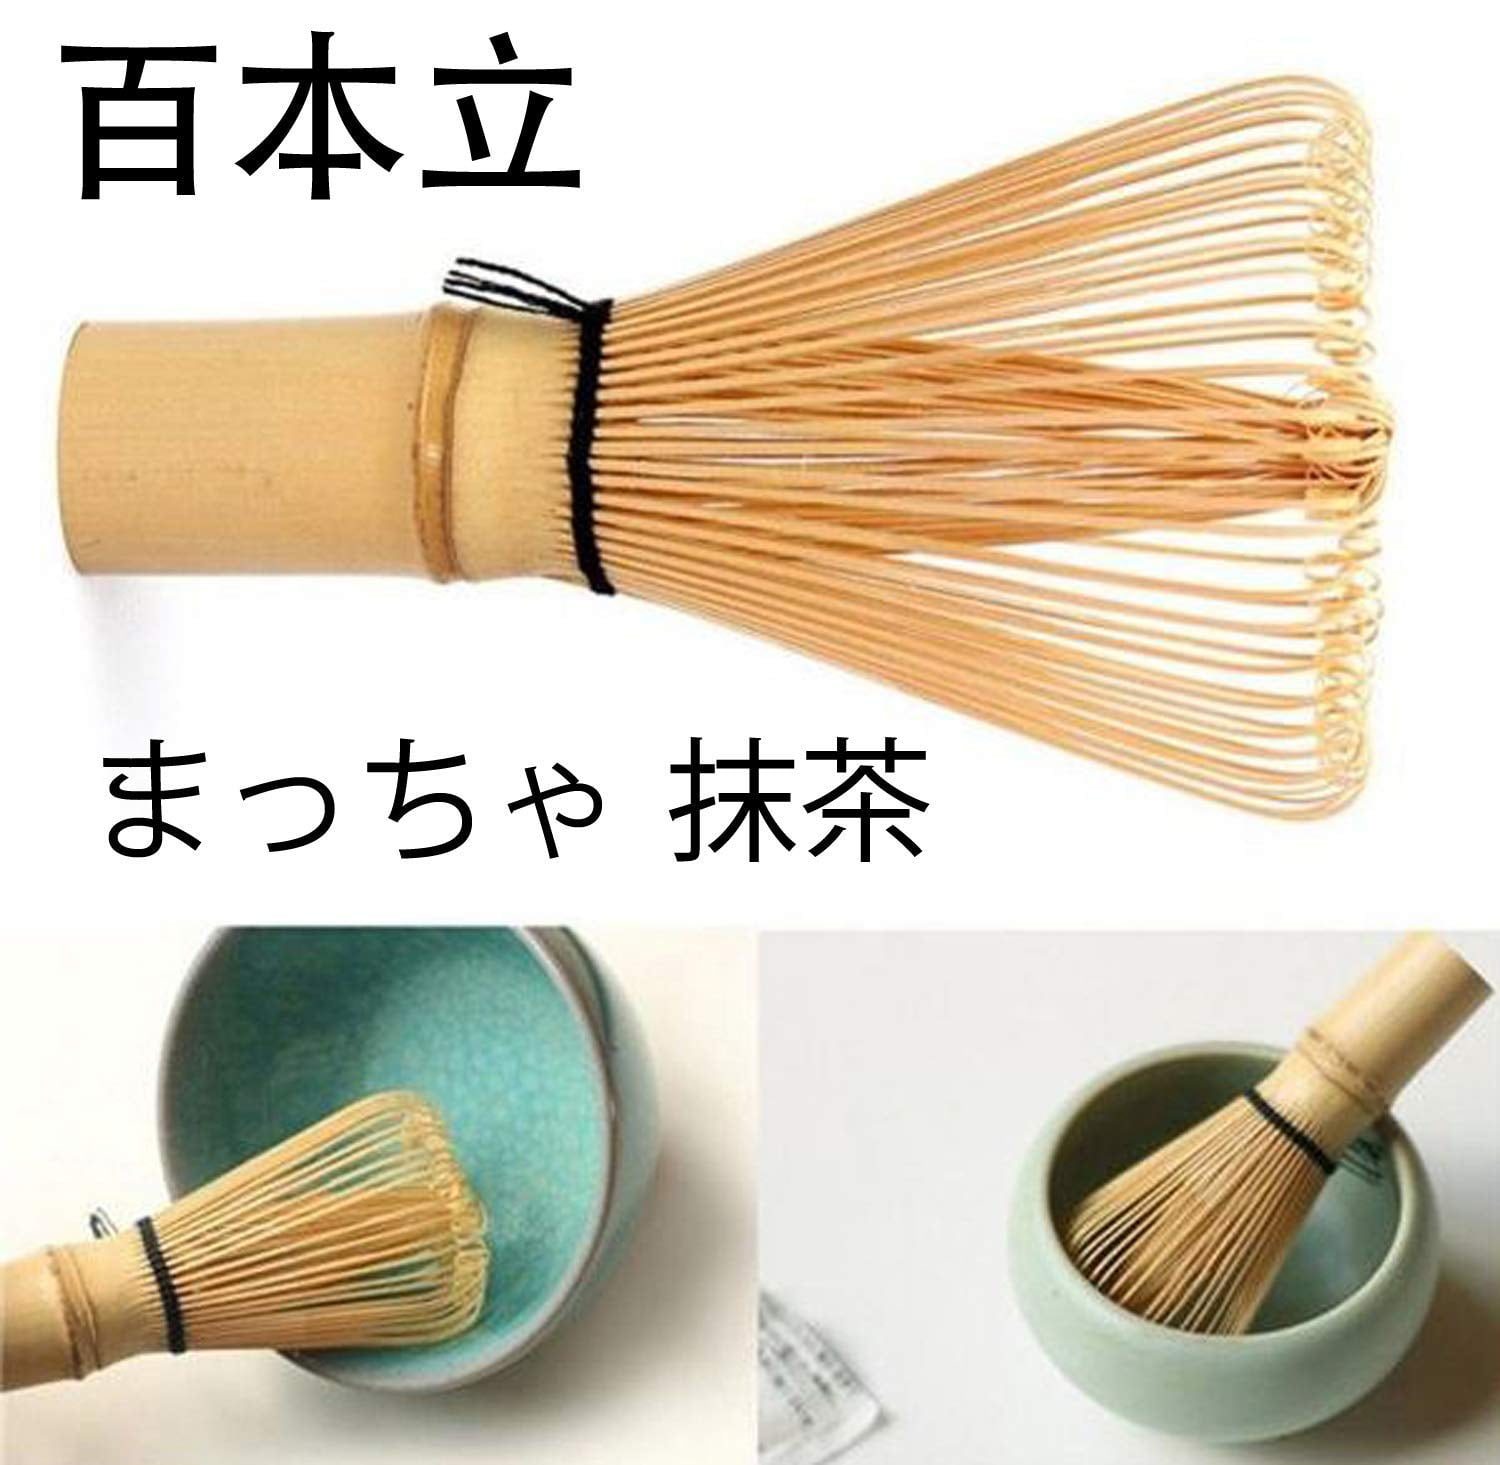 ACAMPTAR Bamboo Brush Japanese Style Whisk Tea Powder Whisk Green Tea Useful Kitchen Accessories 